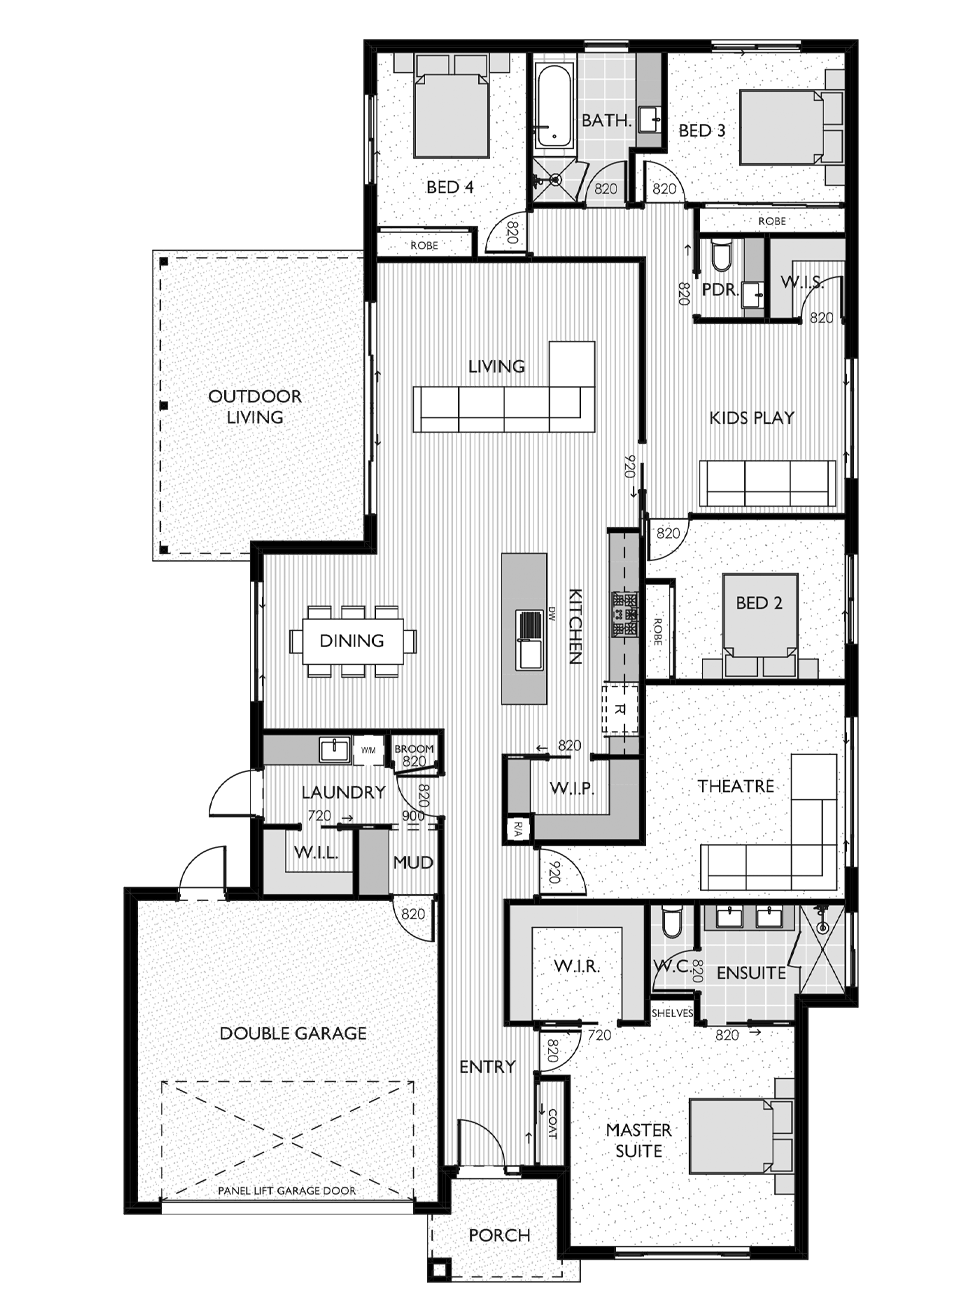 The Kingston 33 Display Home floor plan